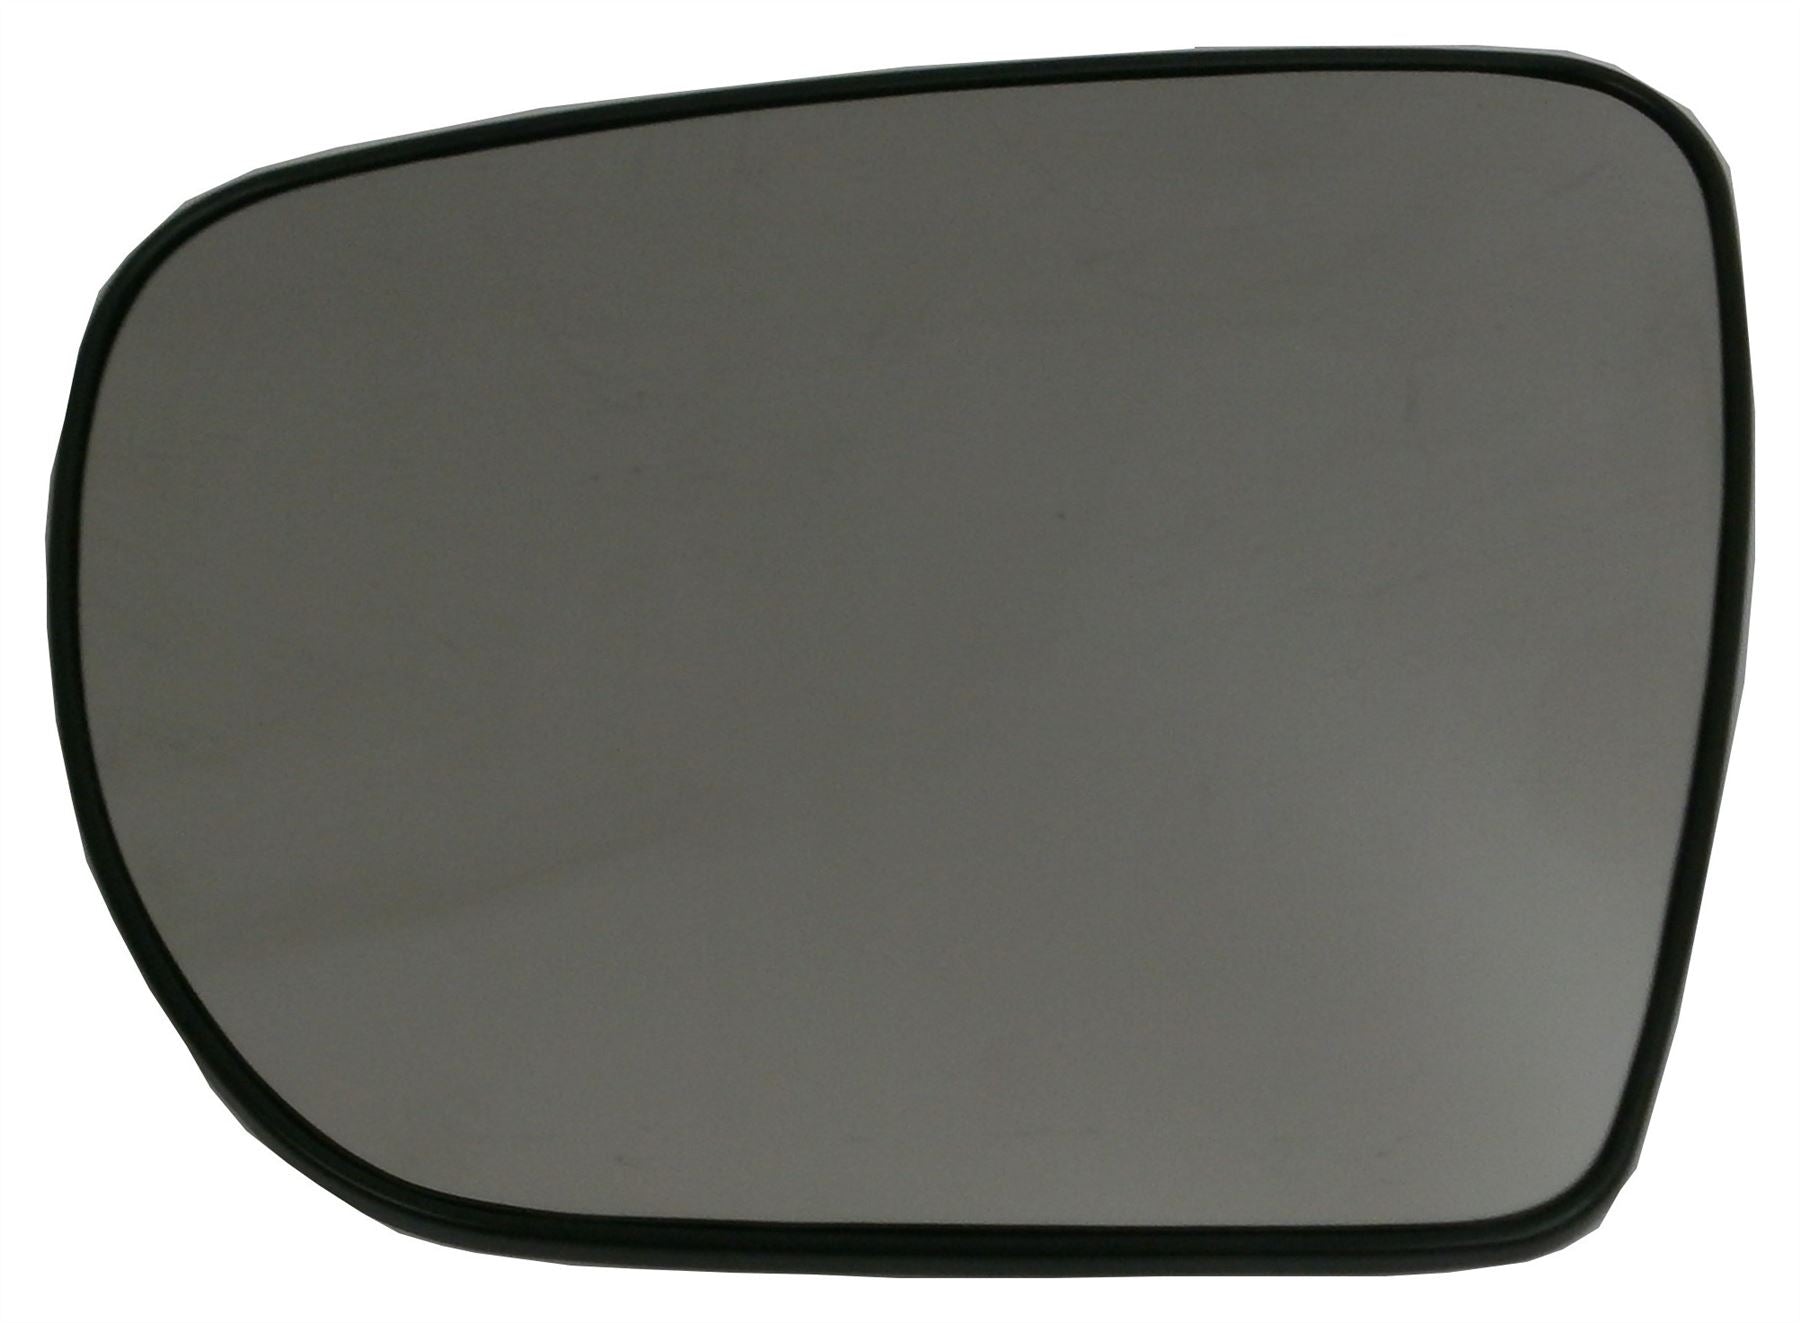 Hyundai ix35 2010-2016 Heated Convex Mirror Glass Passengers Side N/S